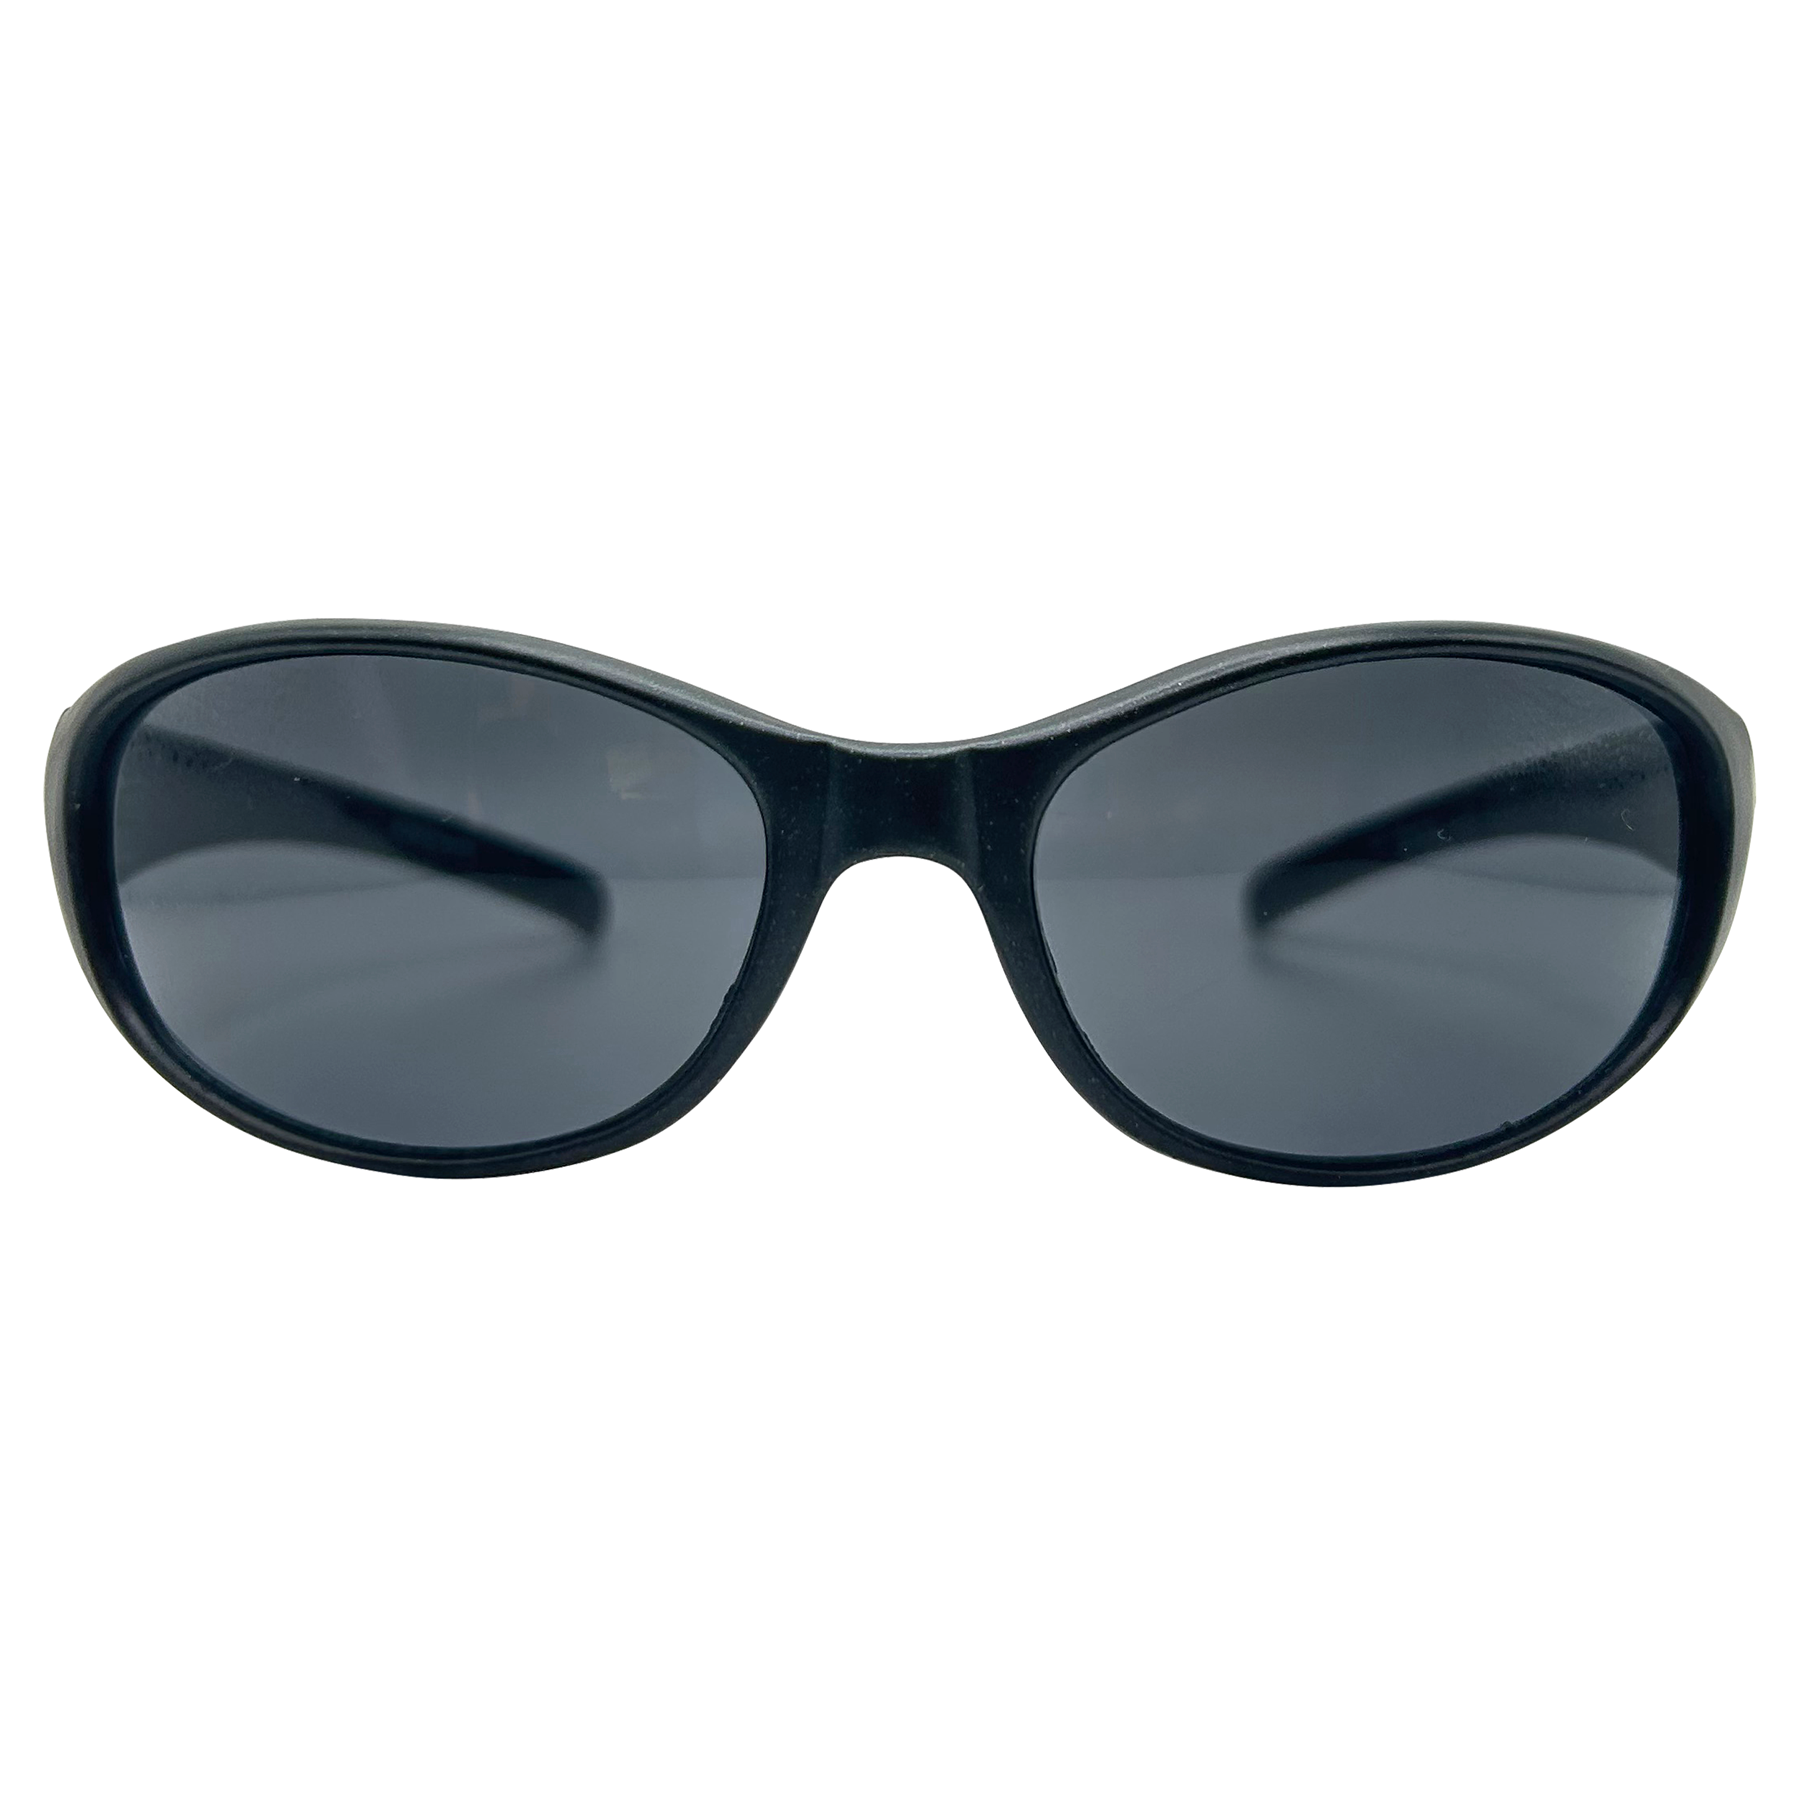 THE 405 Slim Oval Sports Sunglasses